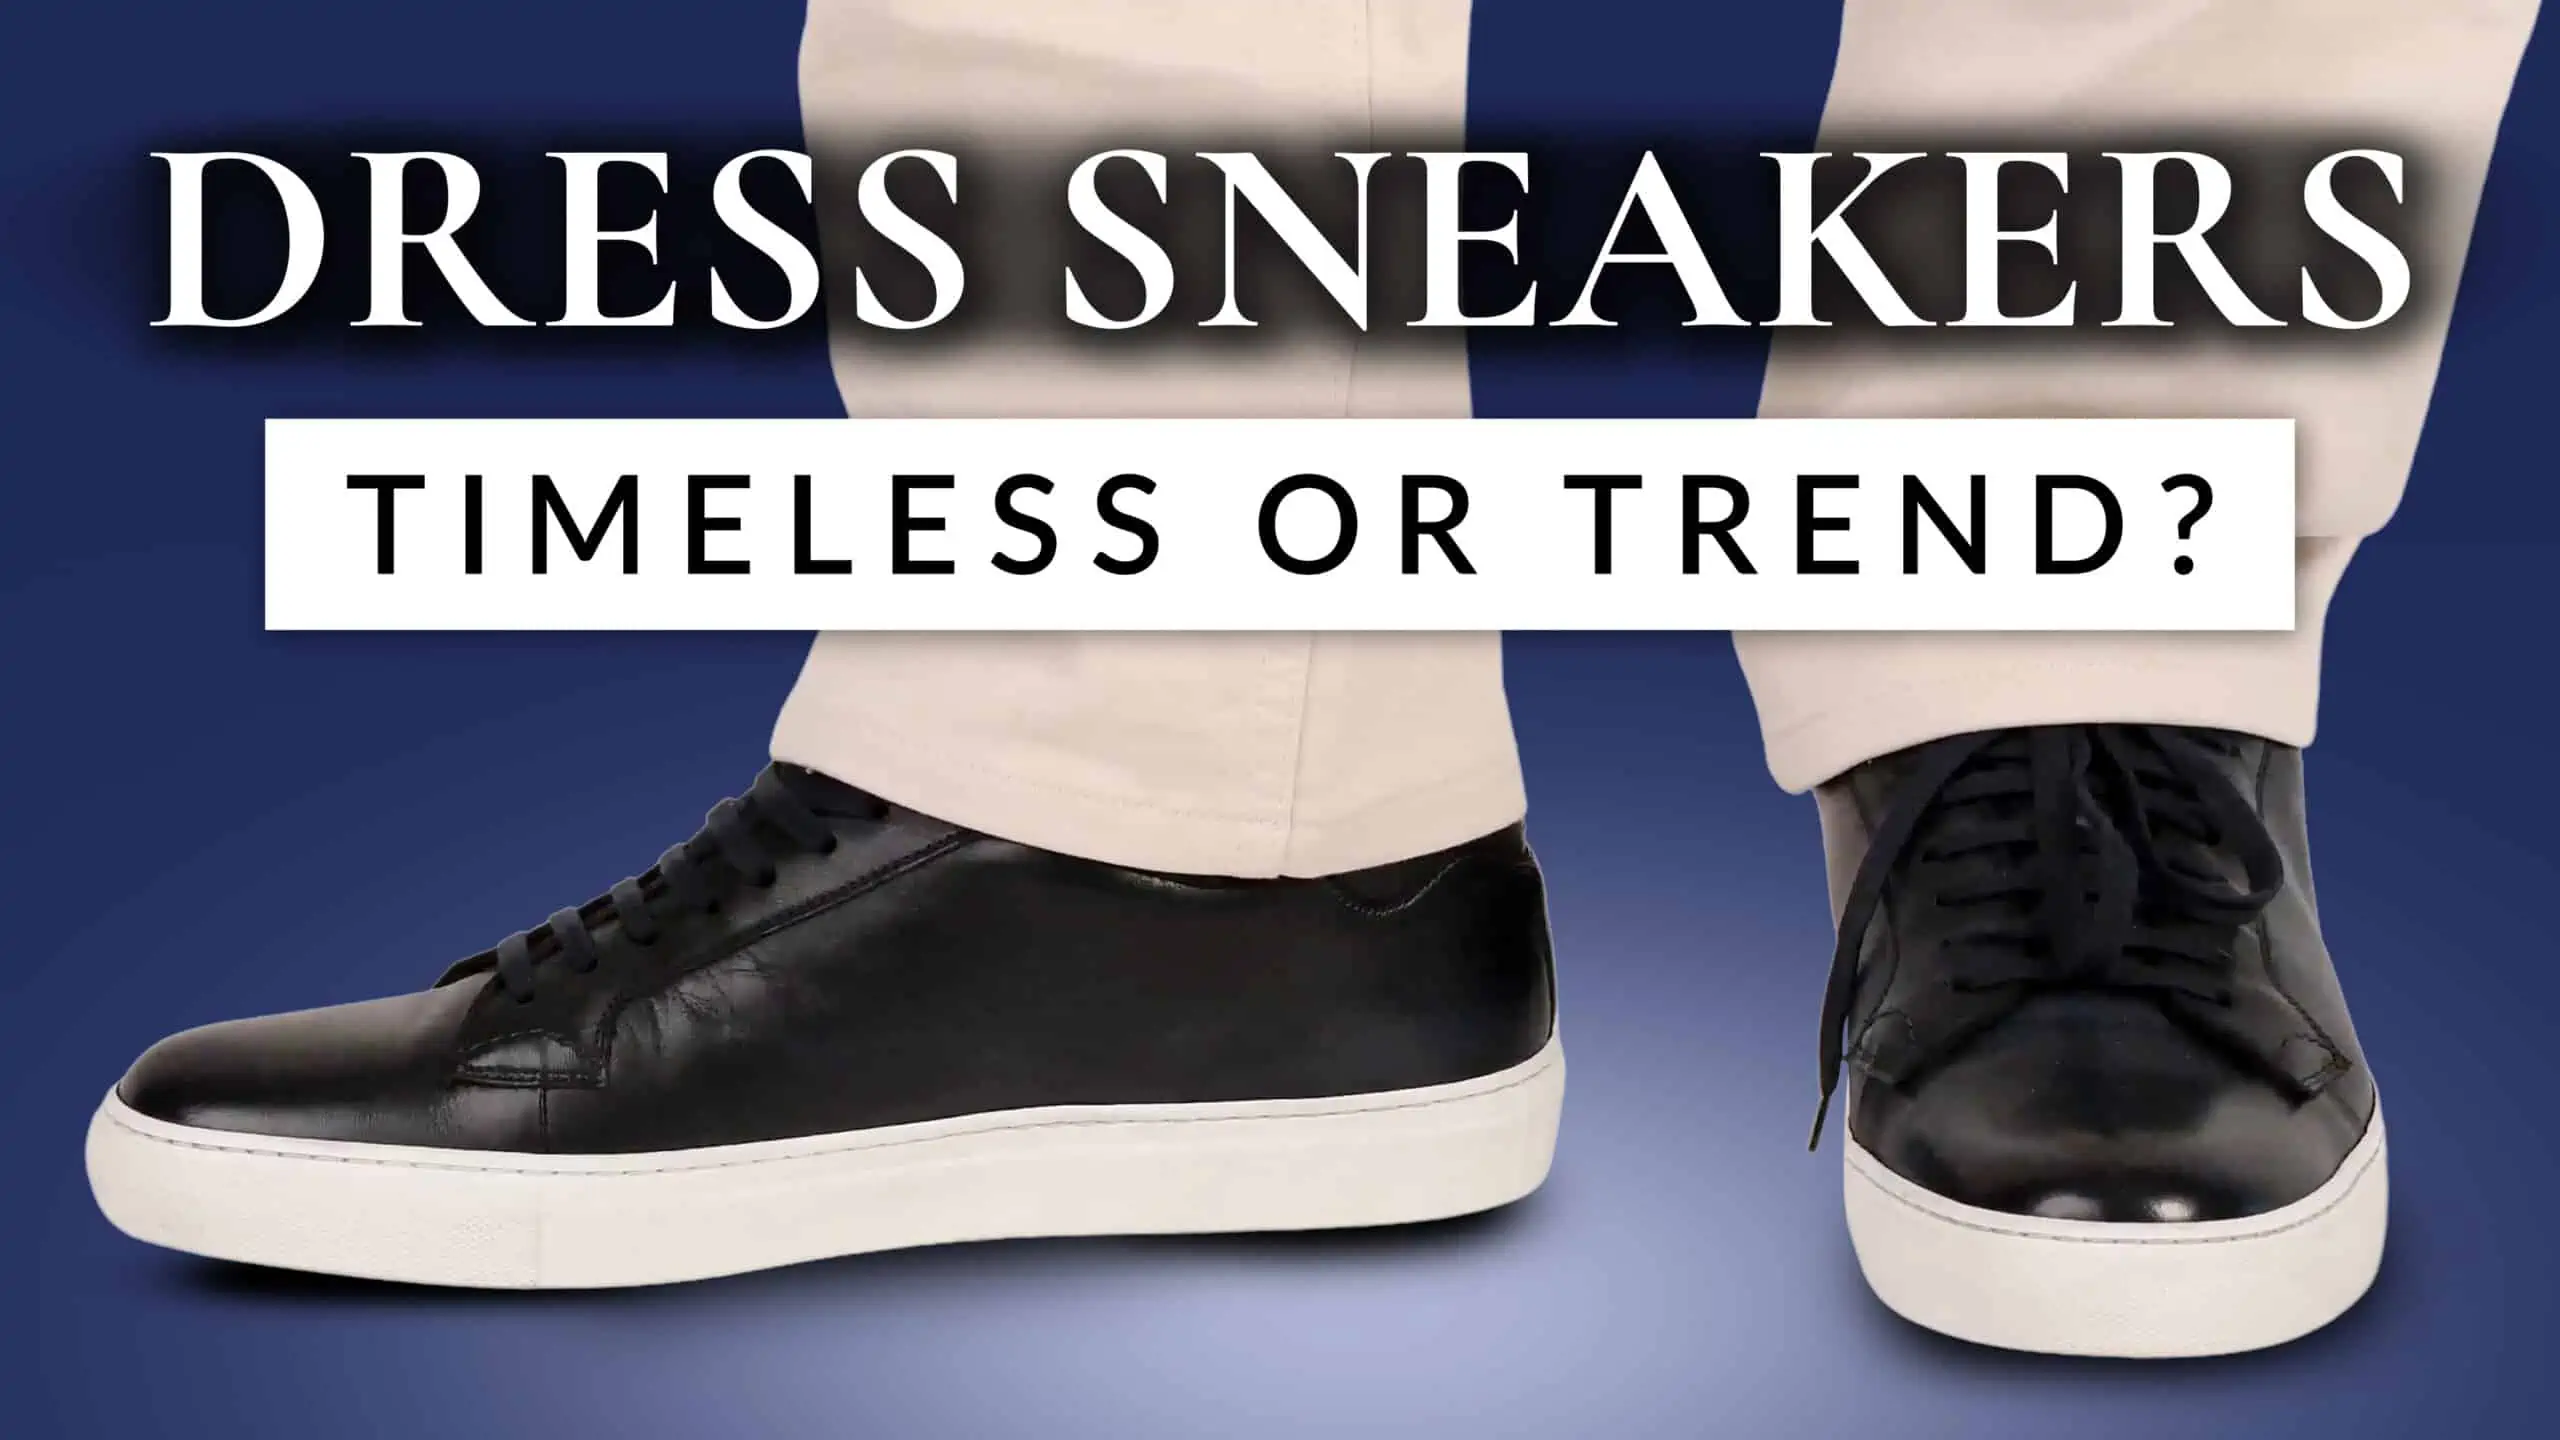 men’s dress sneakers